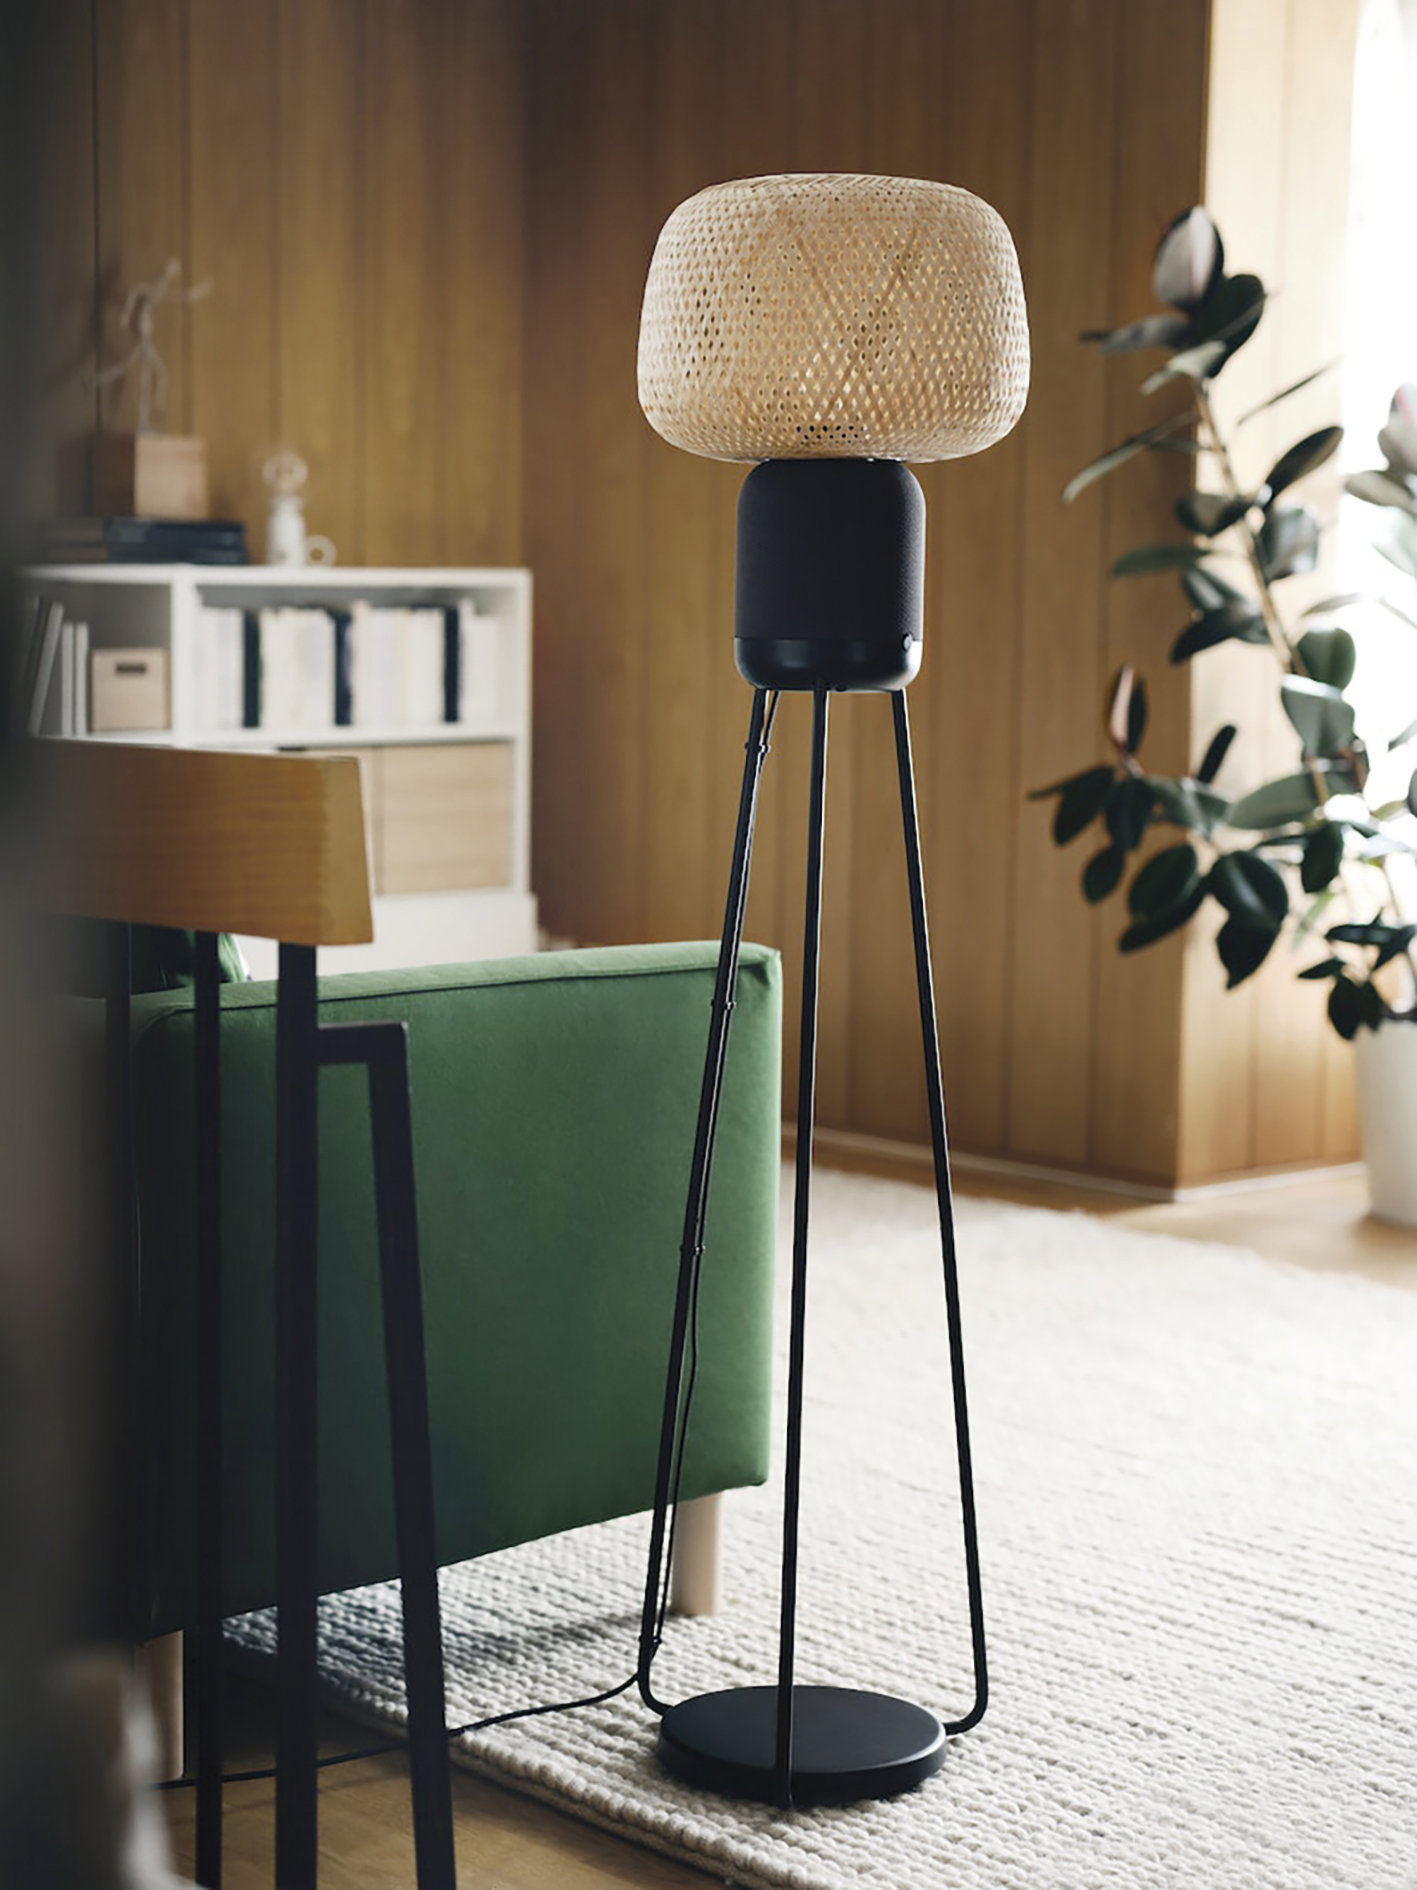 IKEA Home Smart l mpara altavoz wifi 01